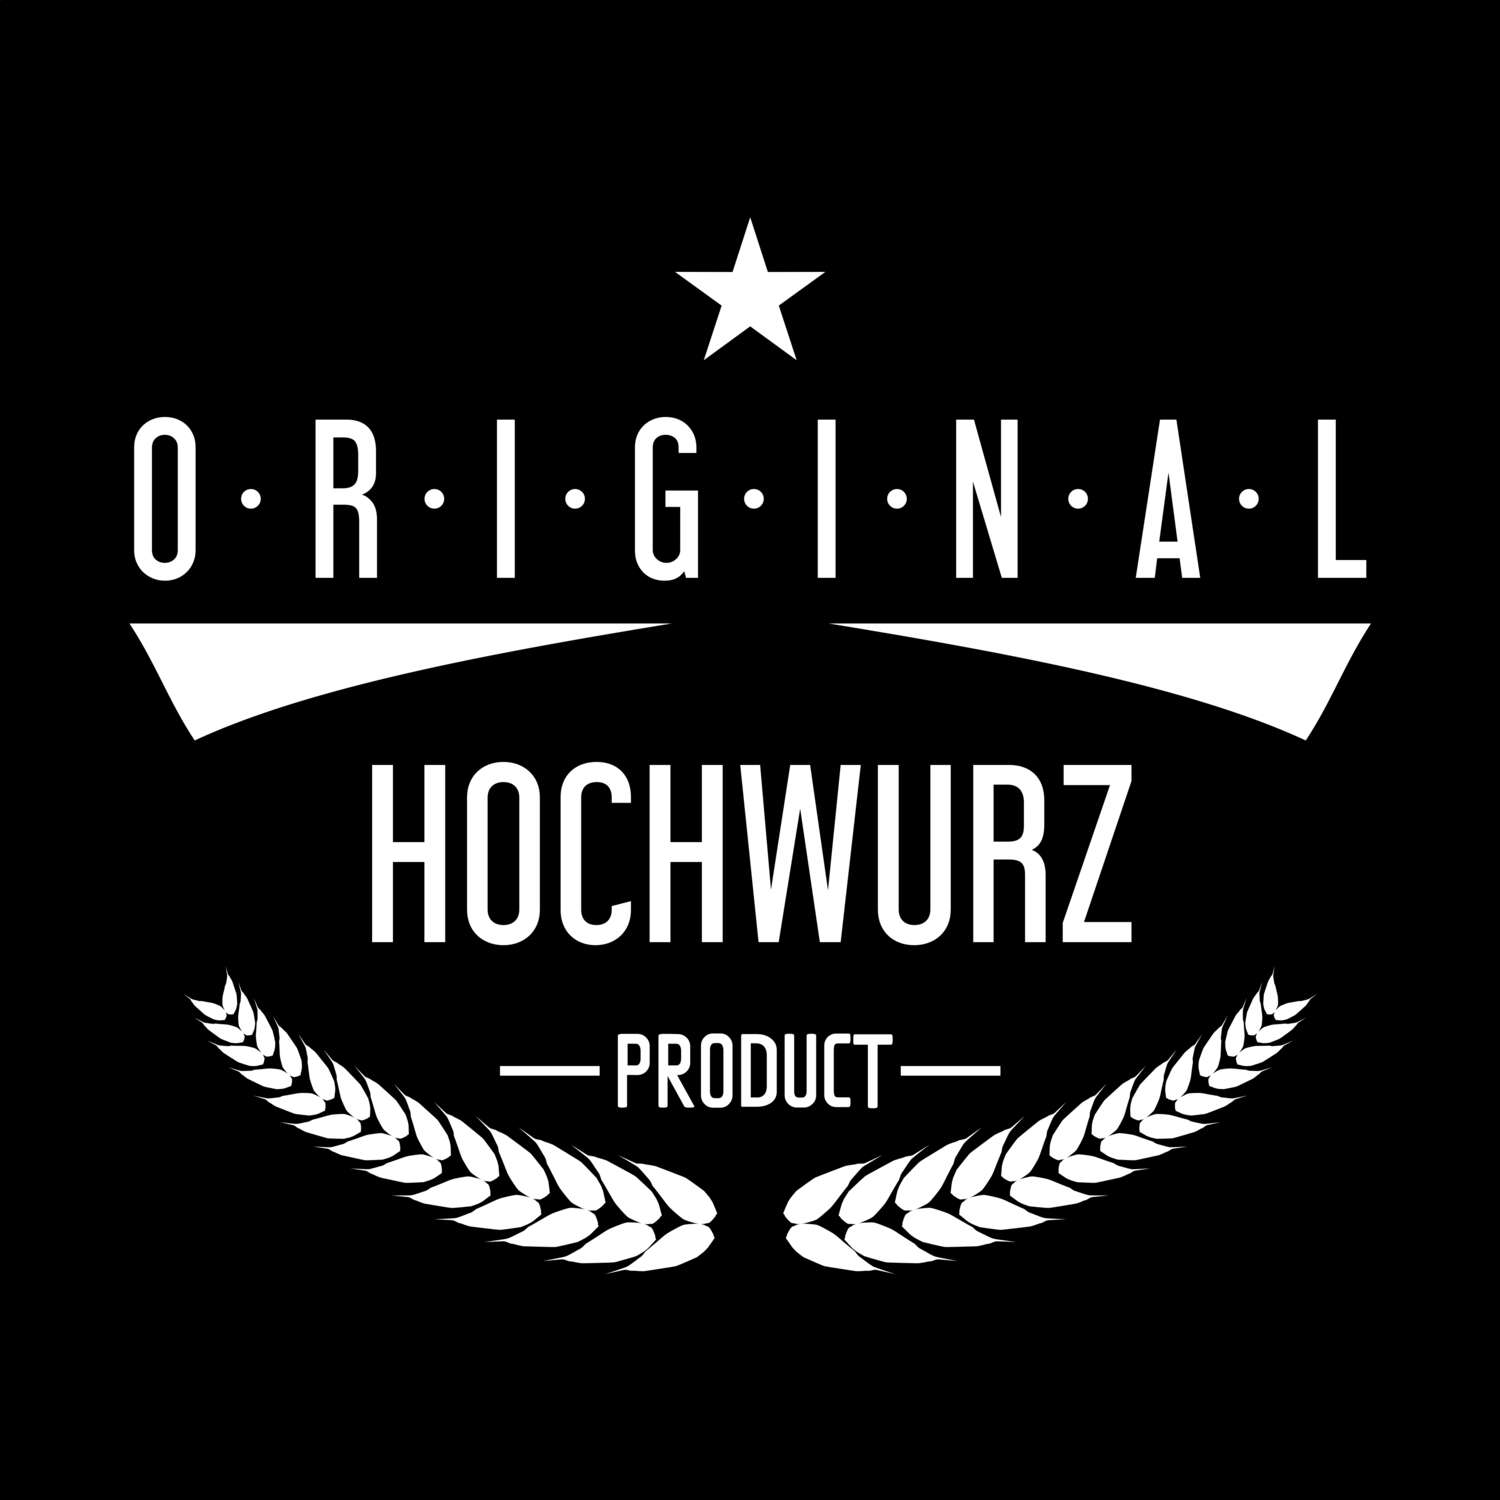 Hochwurz T-Shirt »Original Product«